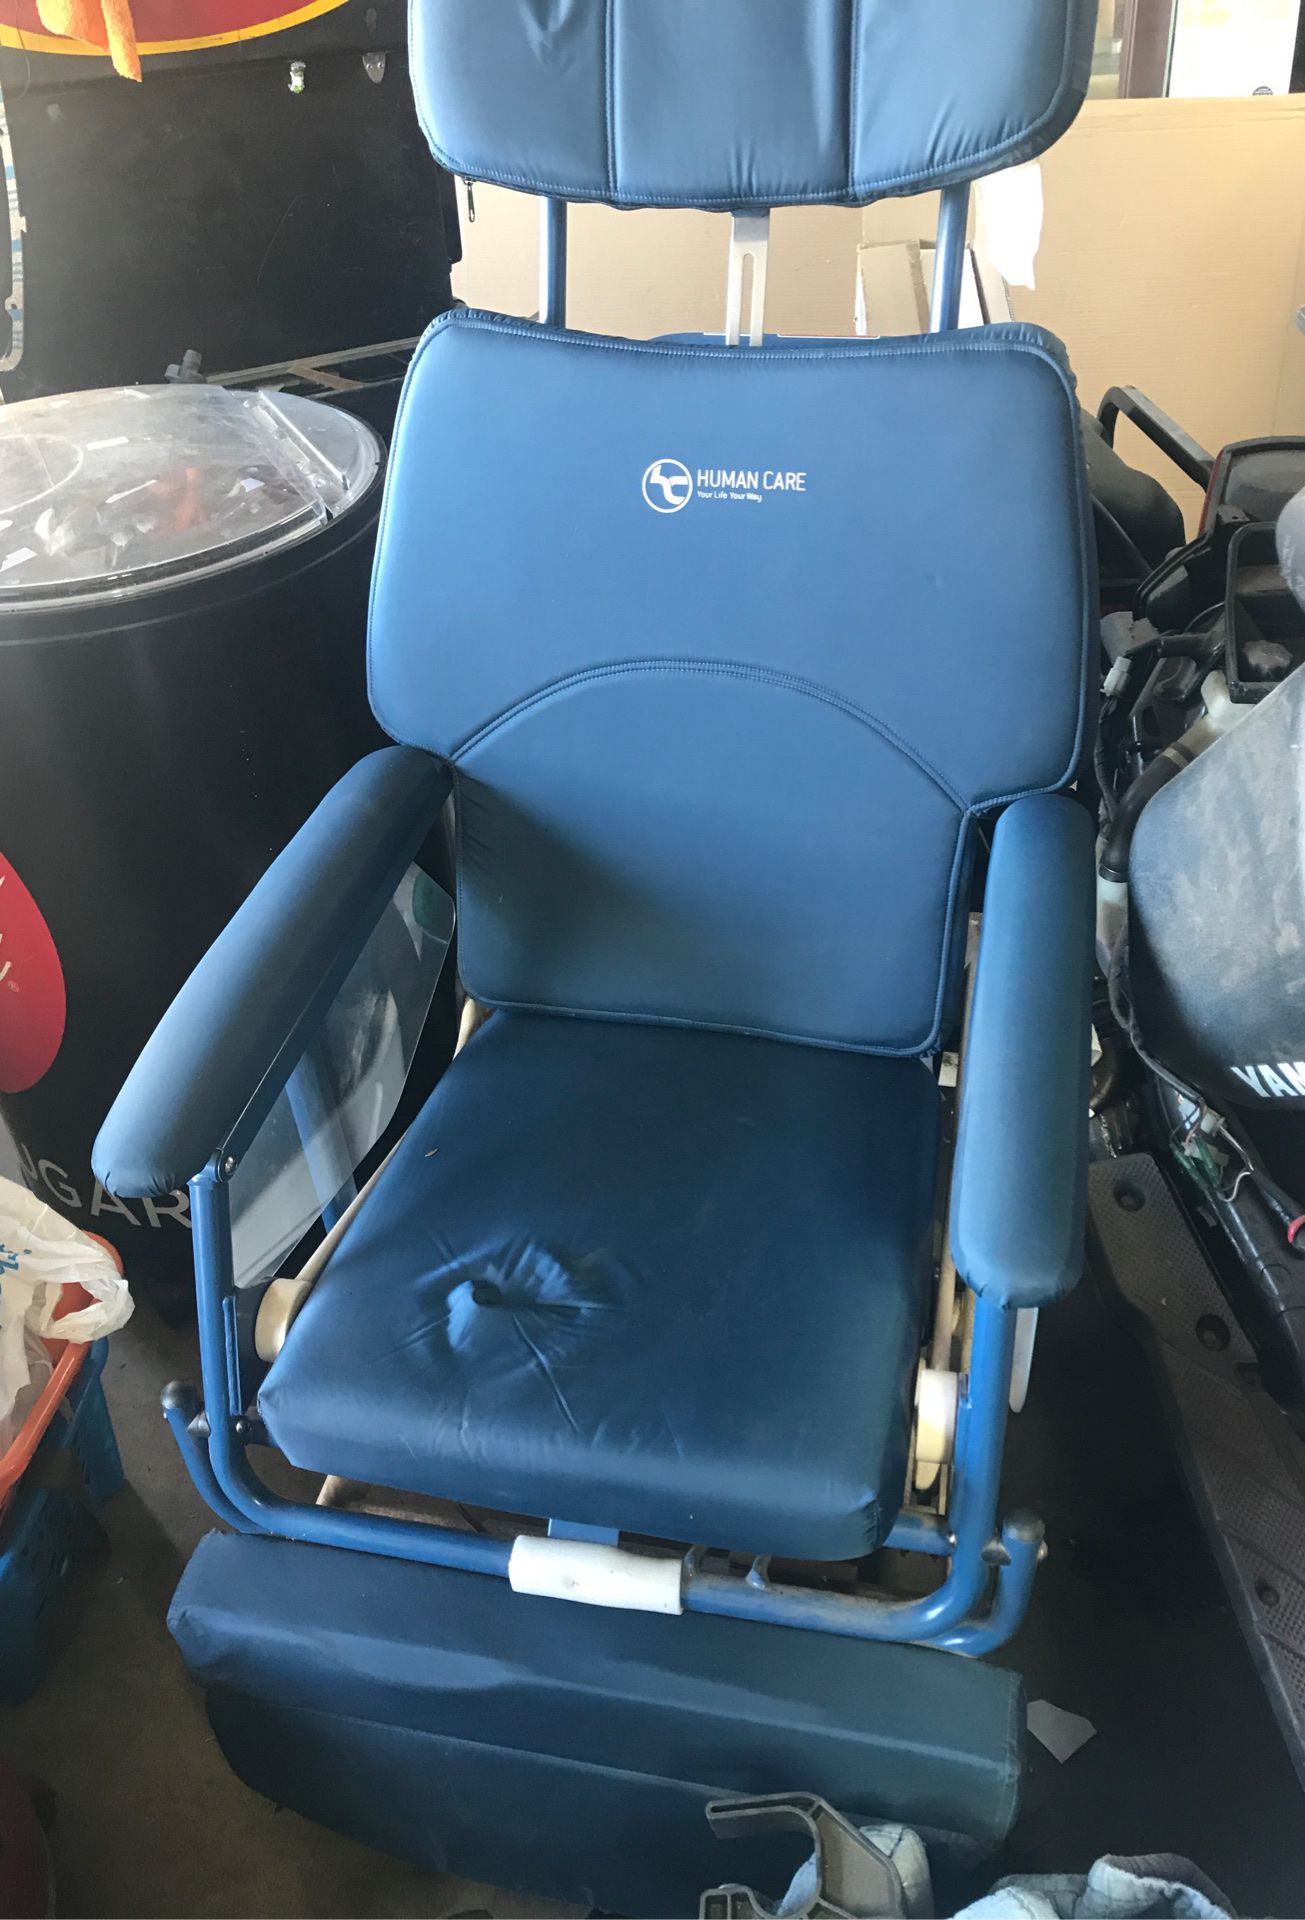 Medical chair recliner on wheels wheelchair